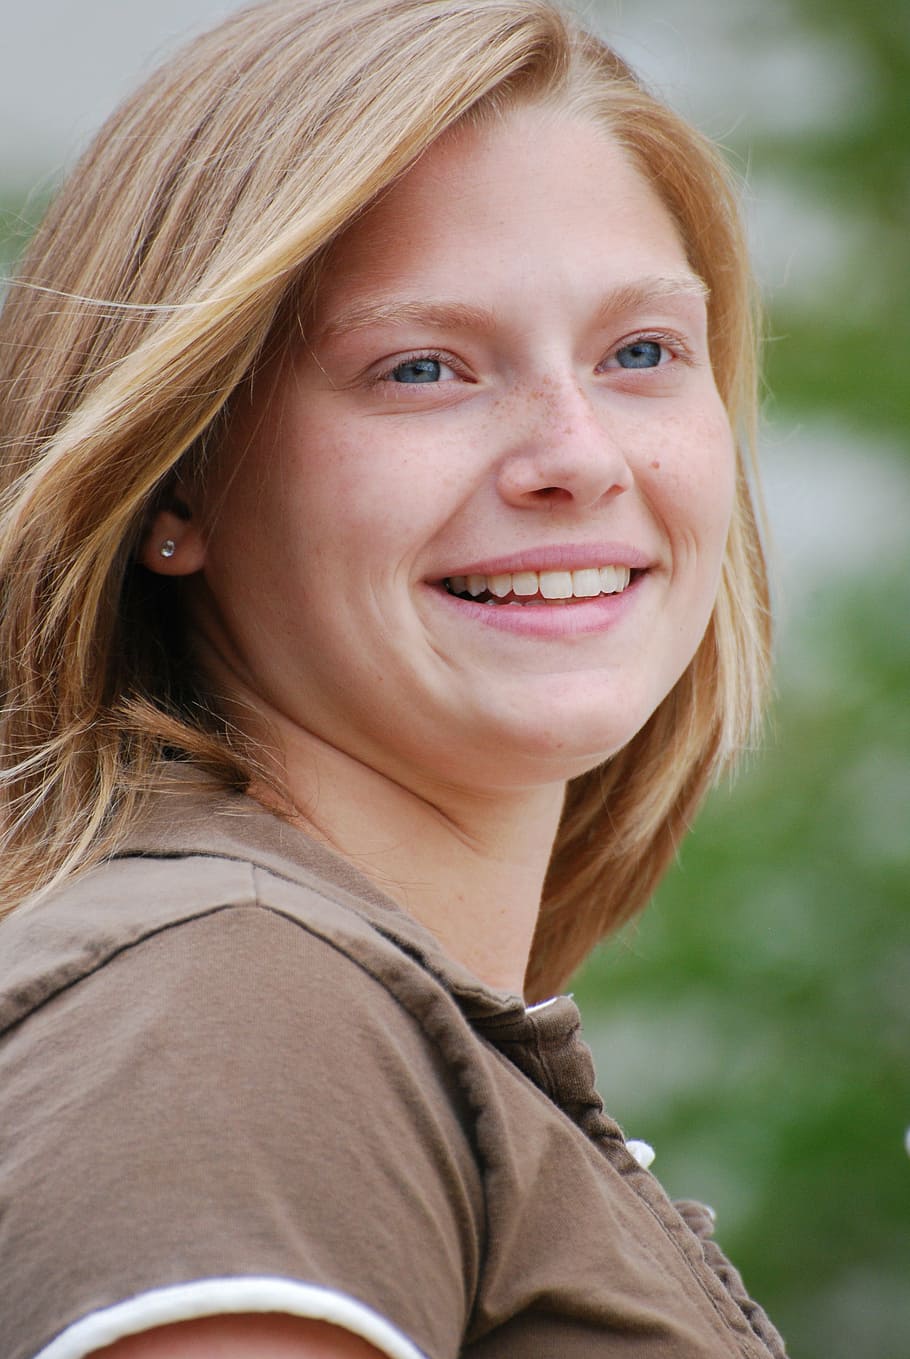 close-up photo of woman wearing brown shirt smiling, student, HD wallpaper